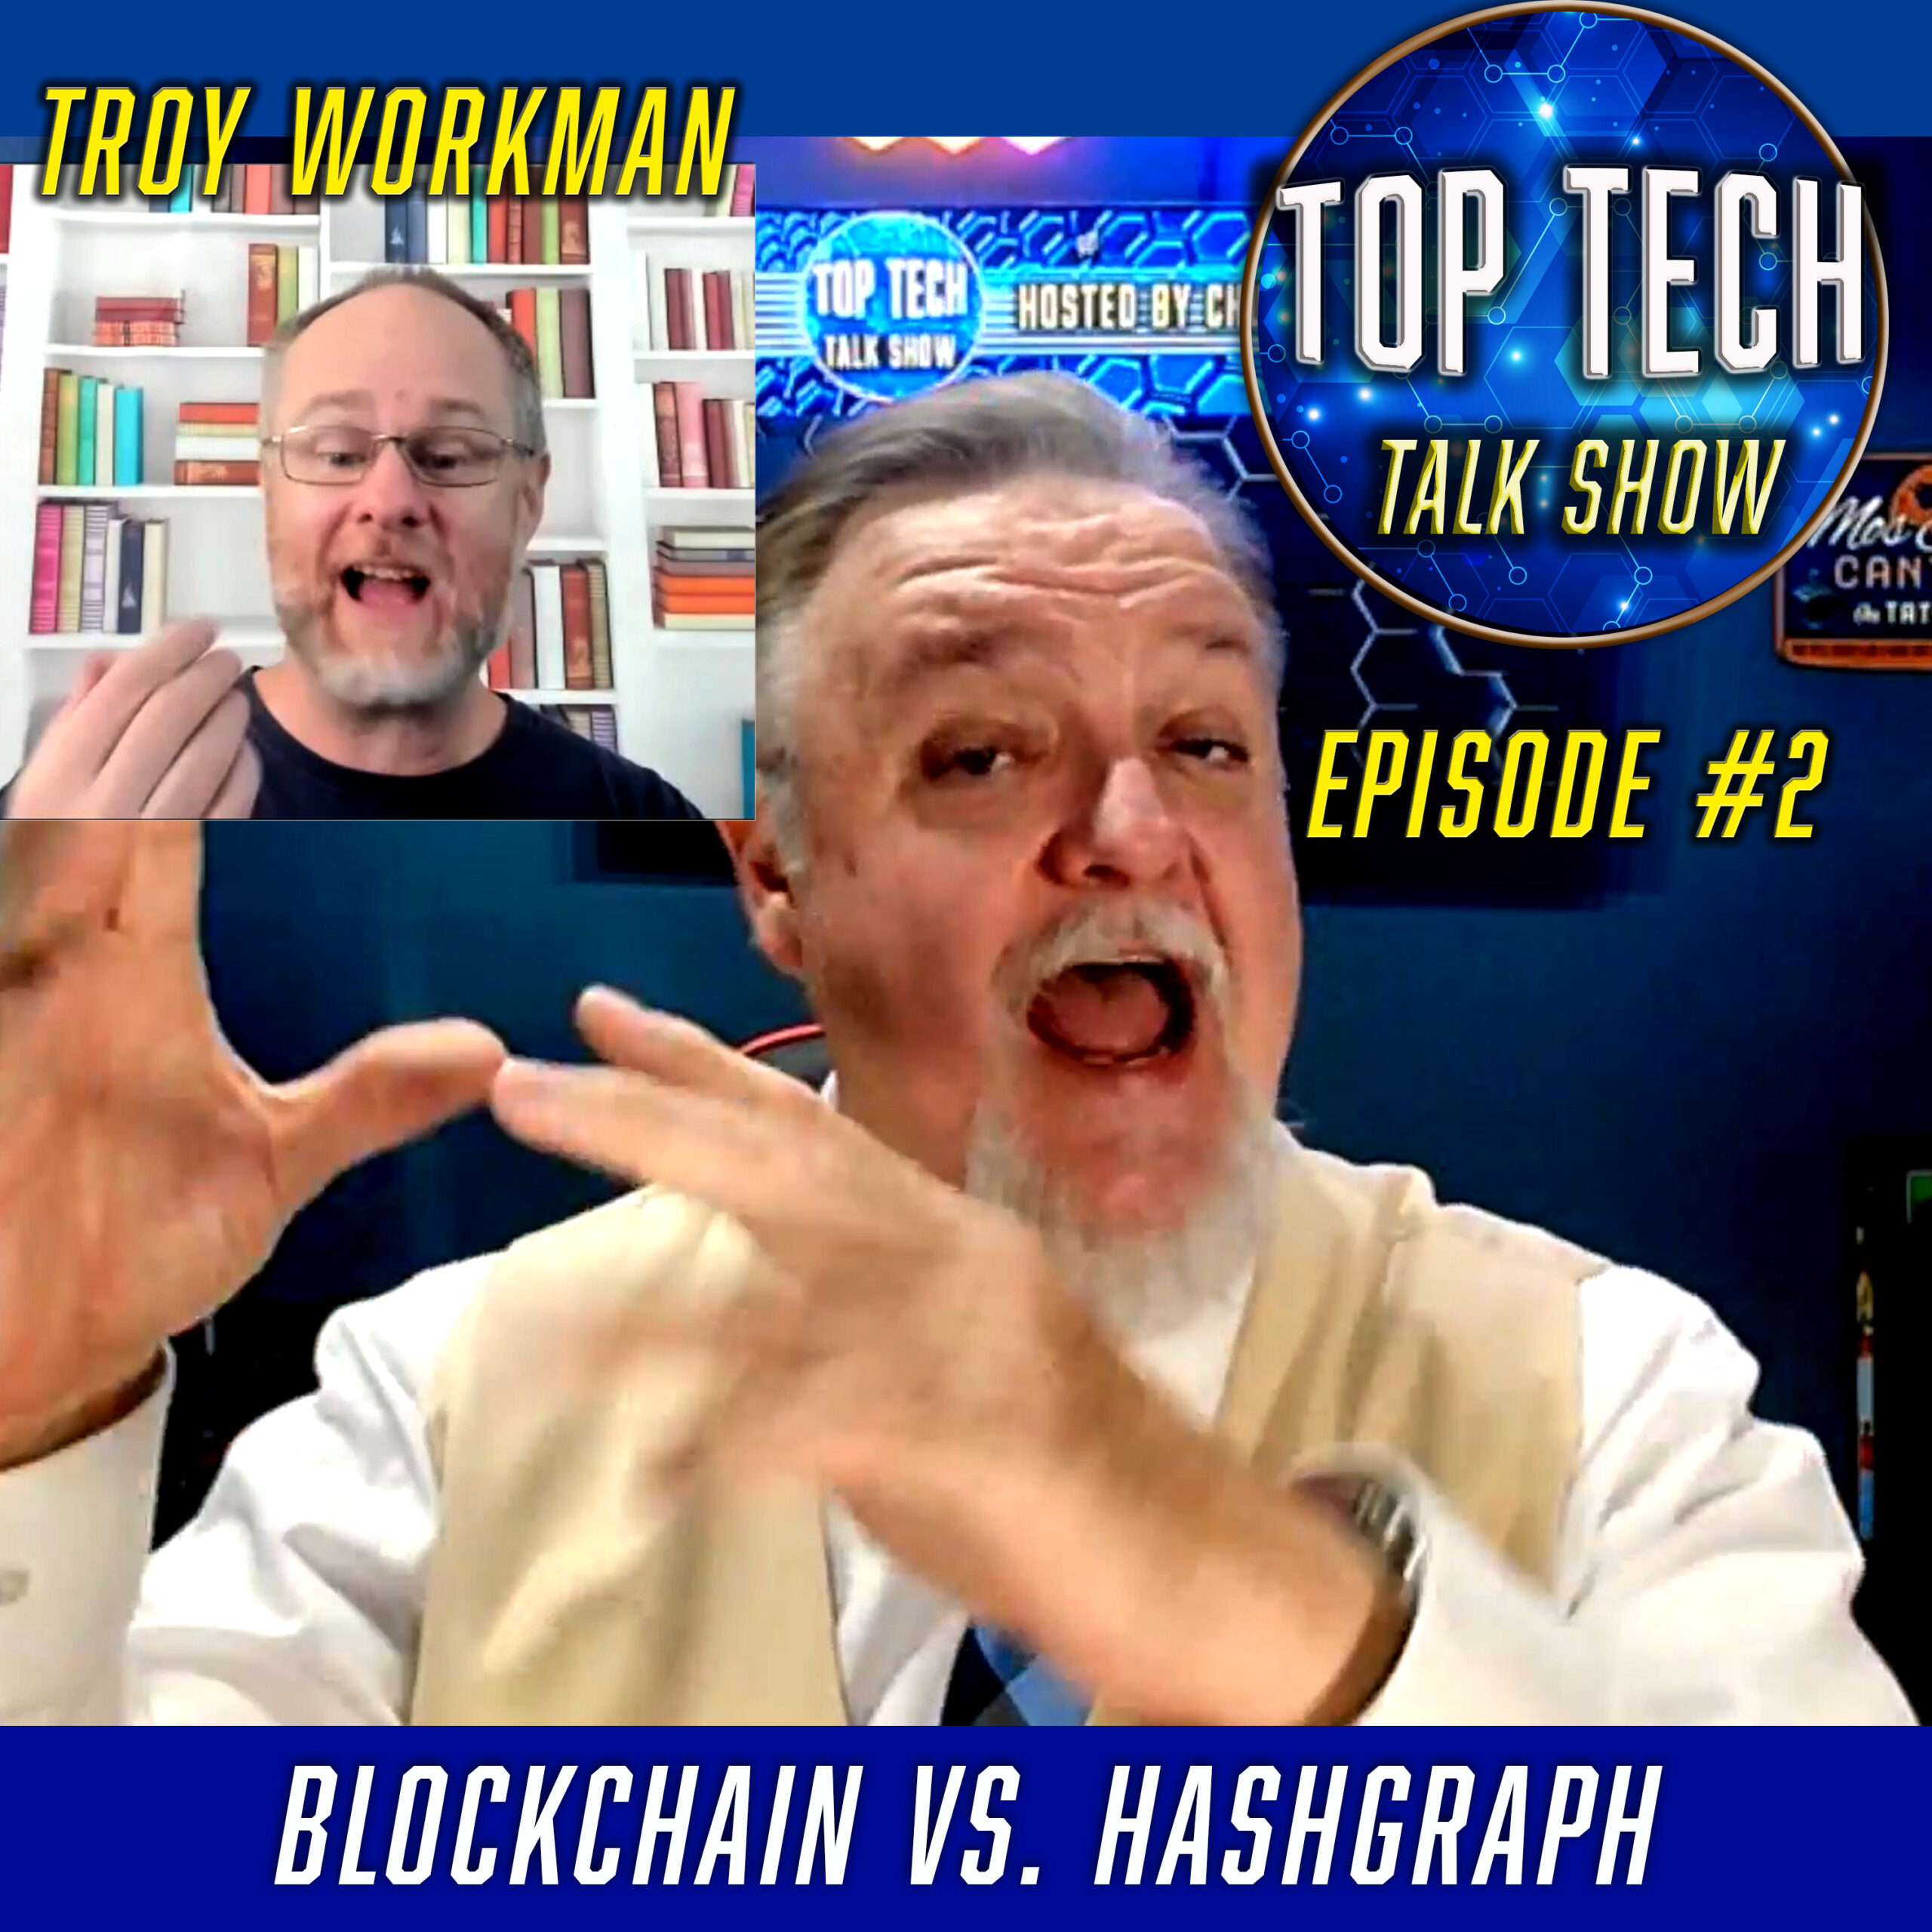 Episode 2 – Troy and Chuck talk Blockchain vs. Hashgraph